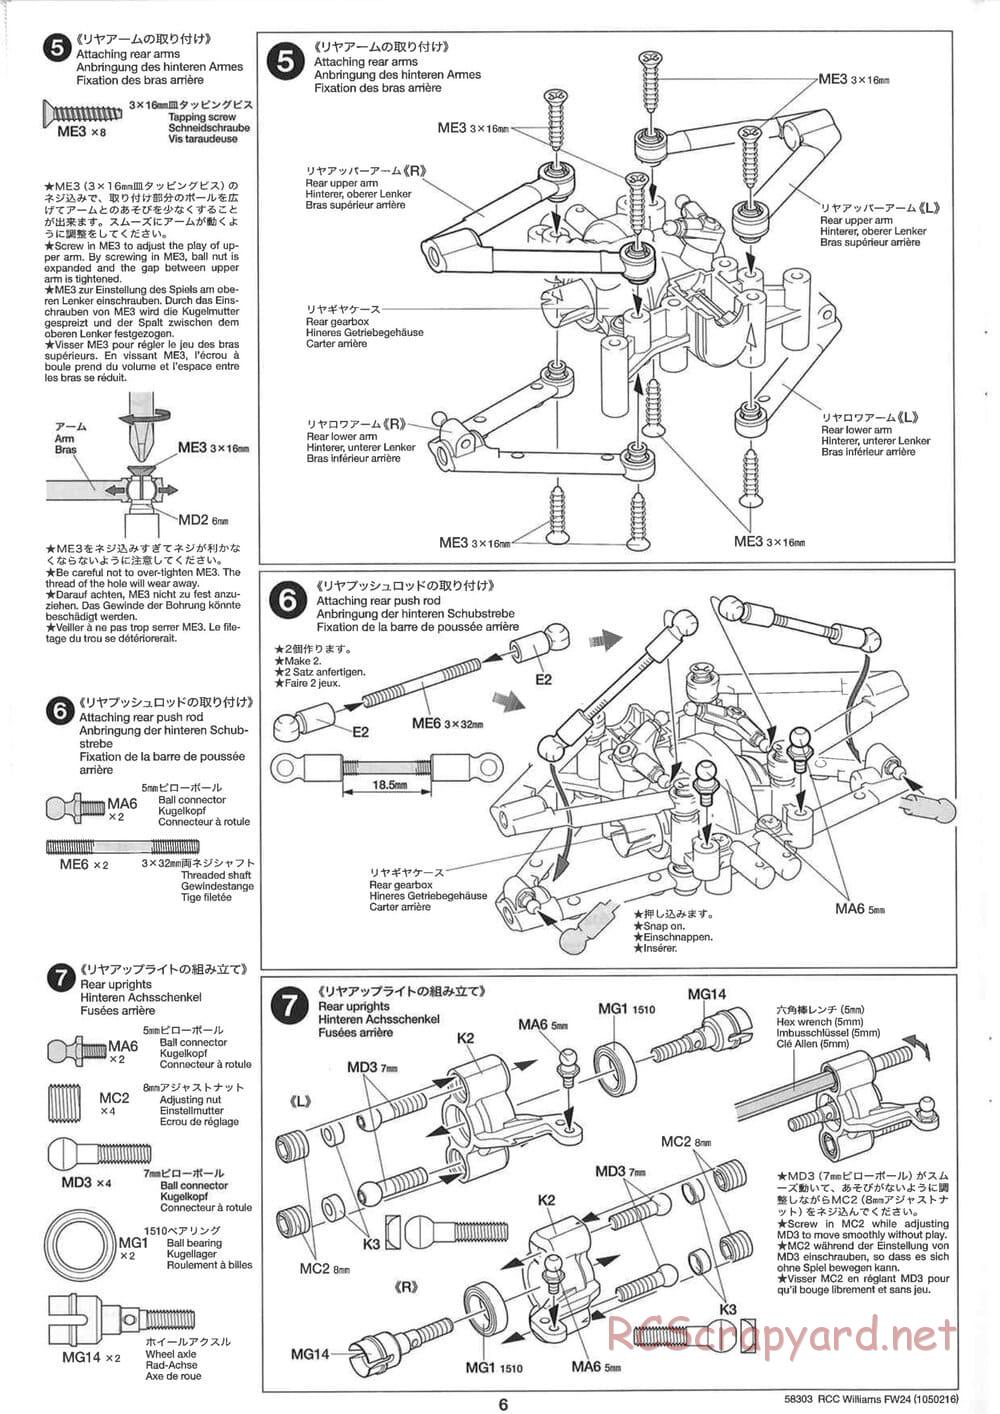 Tamiya - Williams F1 BMW FW24 - F201 Chassis - Manual - Page 6